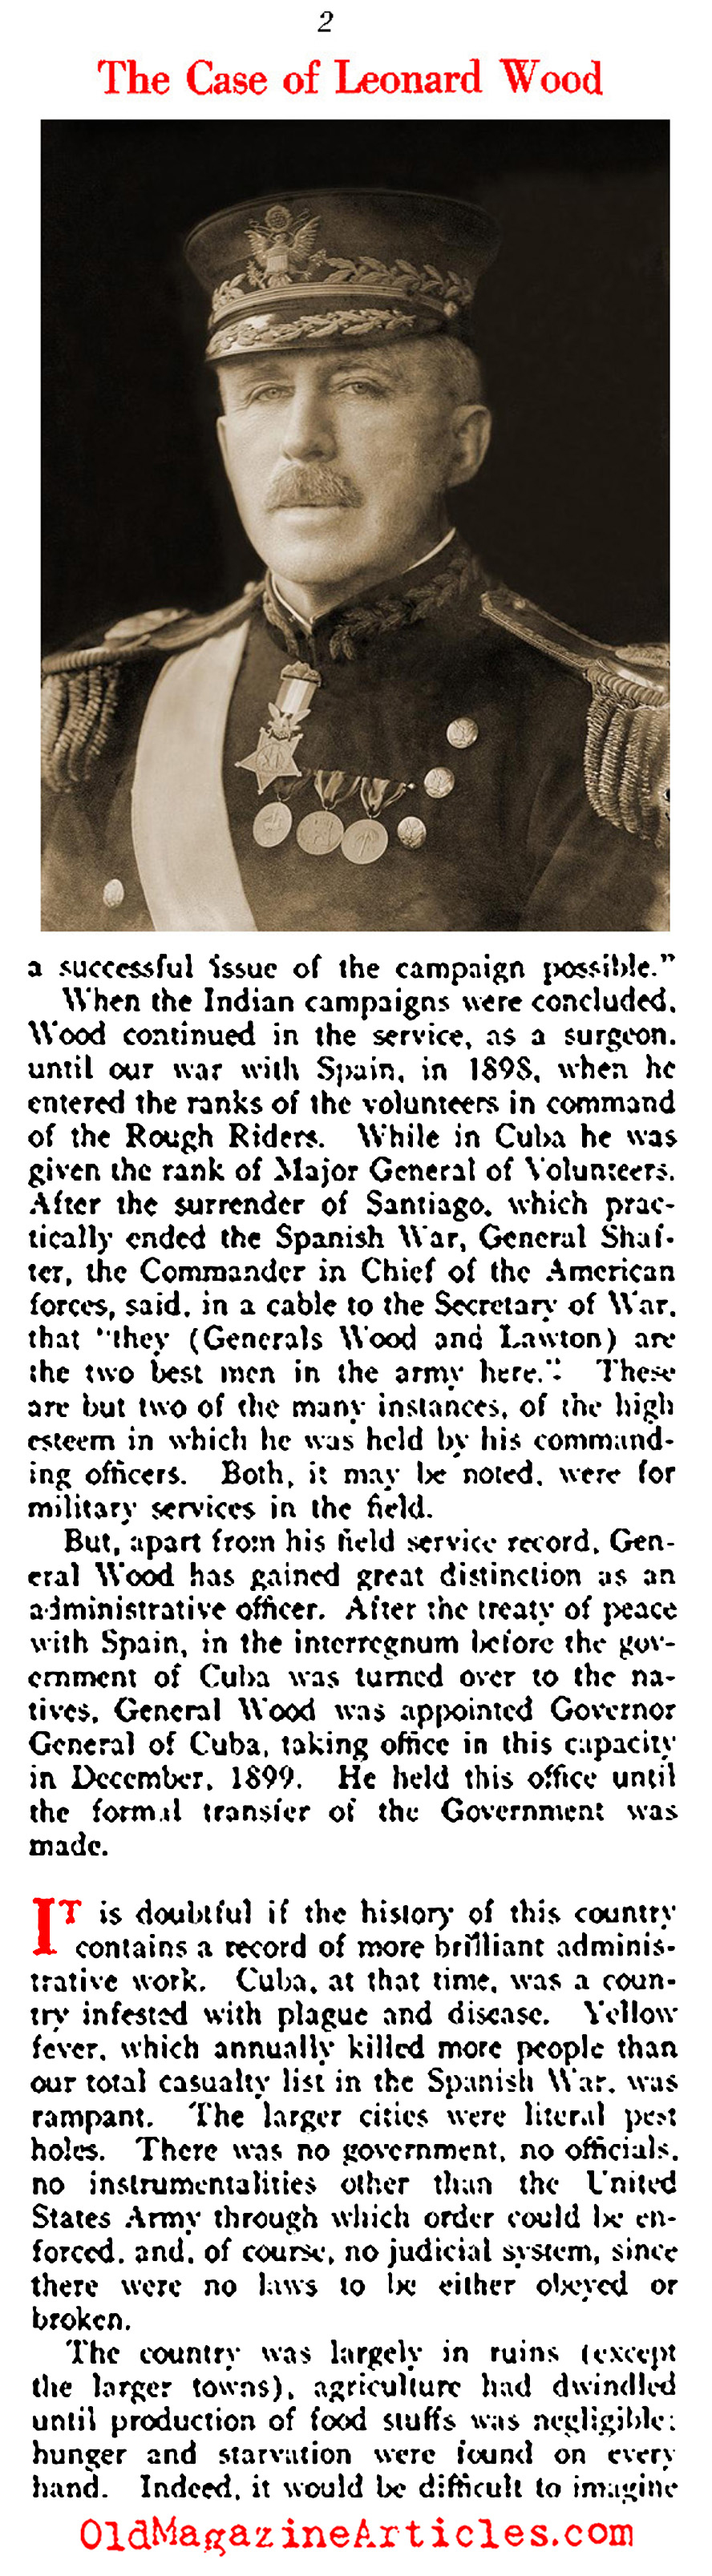 The Case for Leonard Wood (Vanity Fair, 1918)